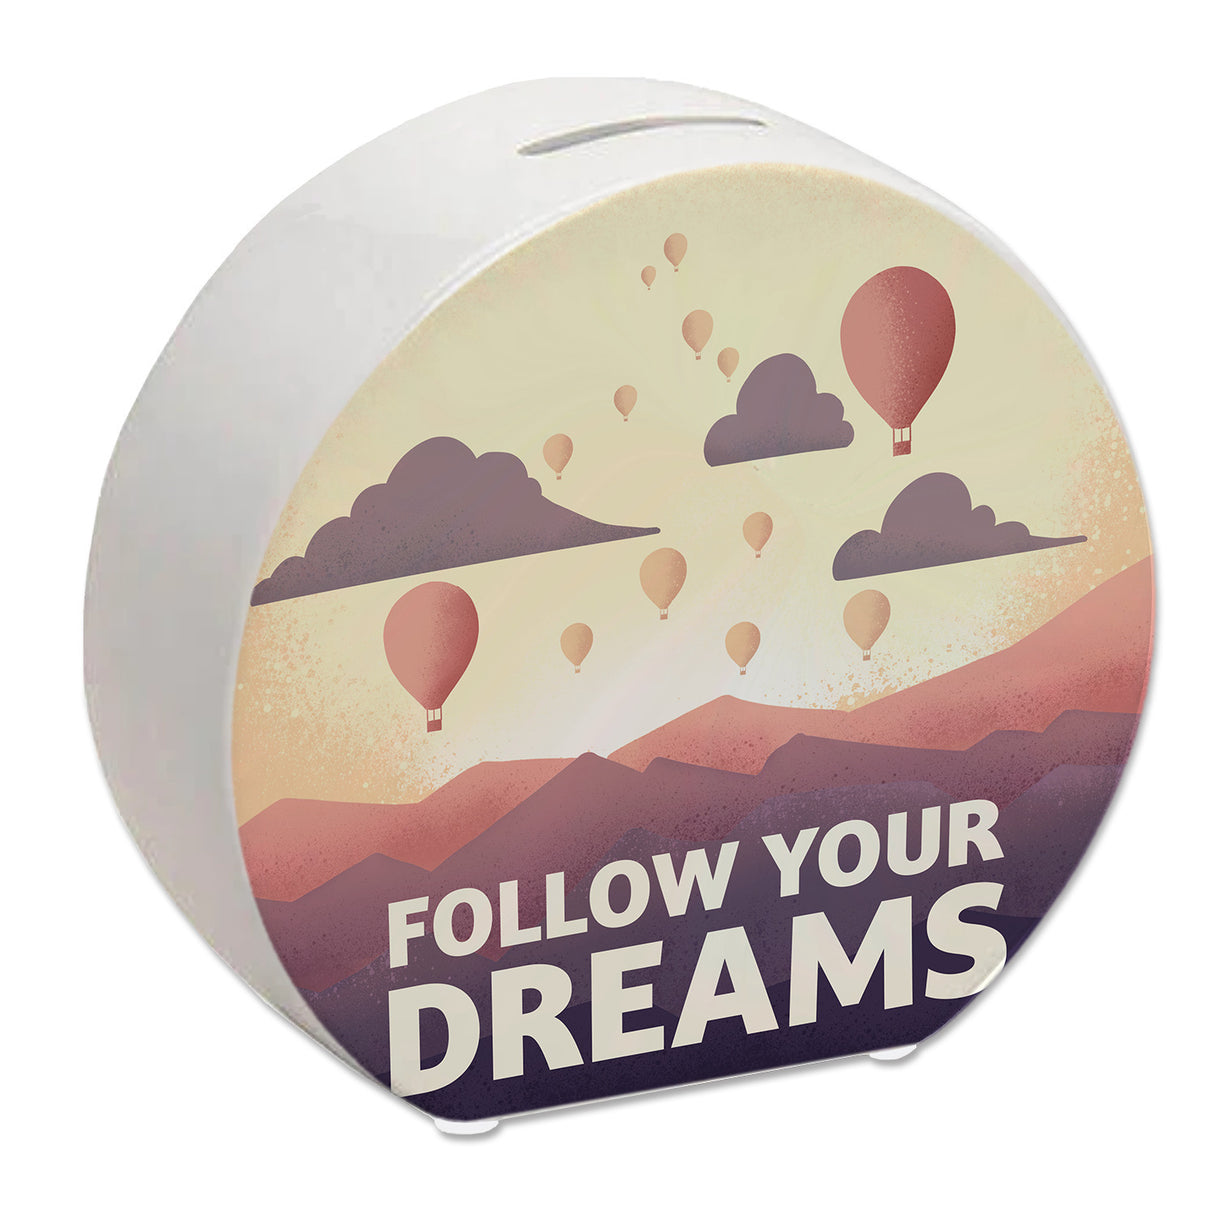 Follow your dreams Spardose mit Heißluftballons und Sonnenuntergang